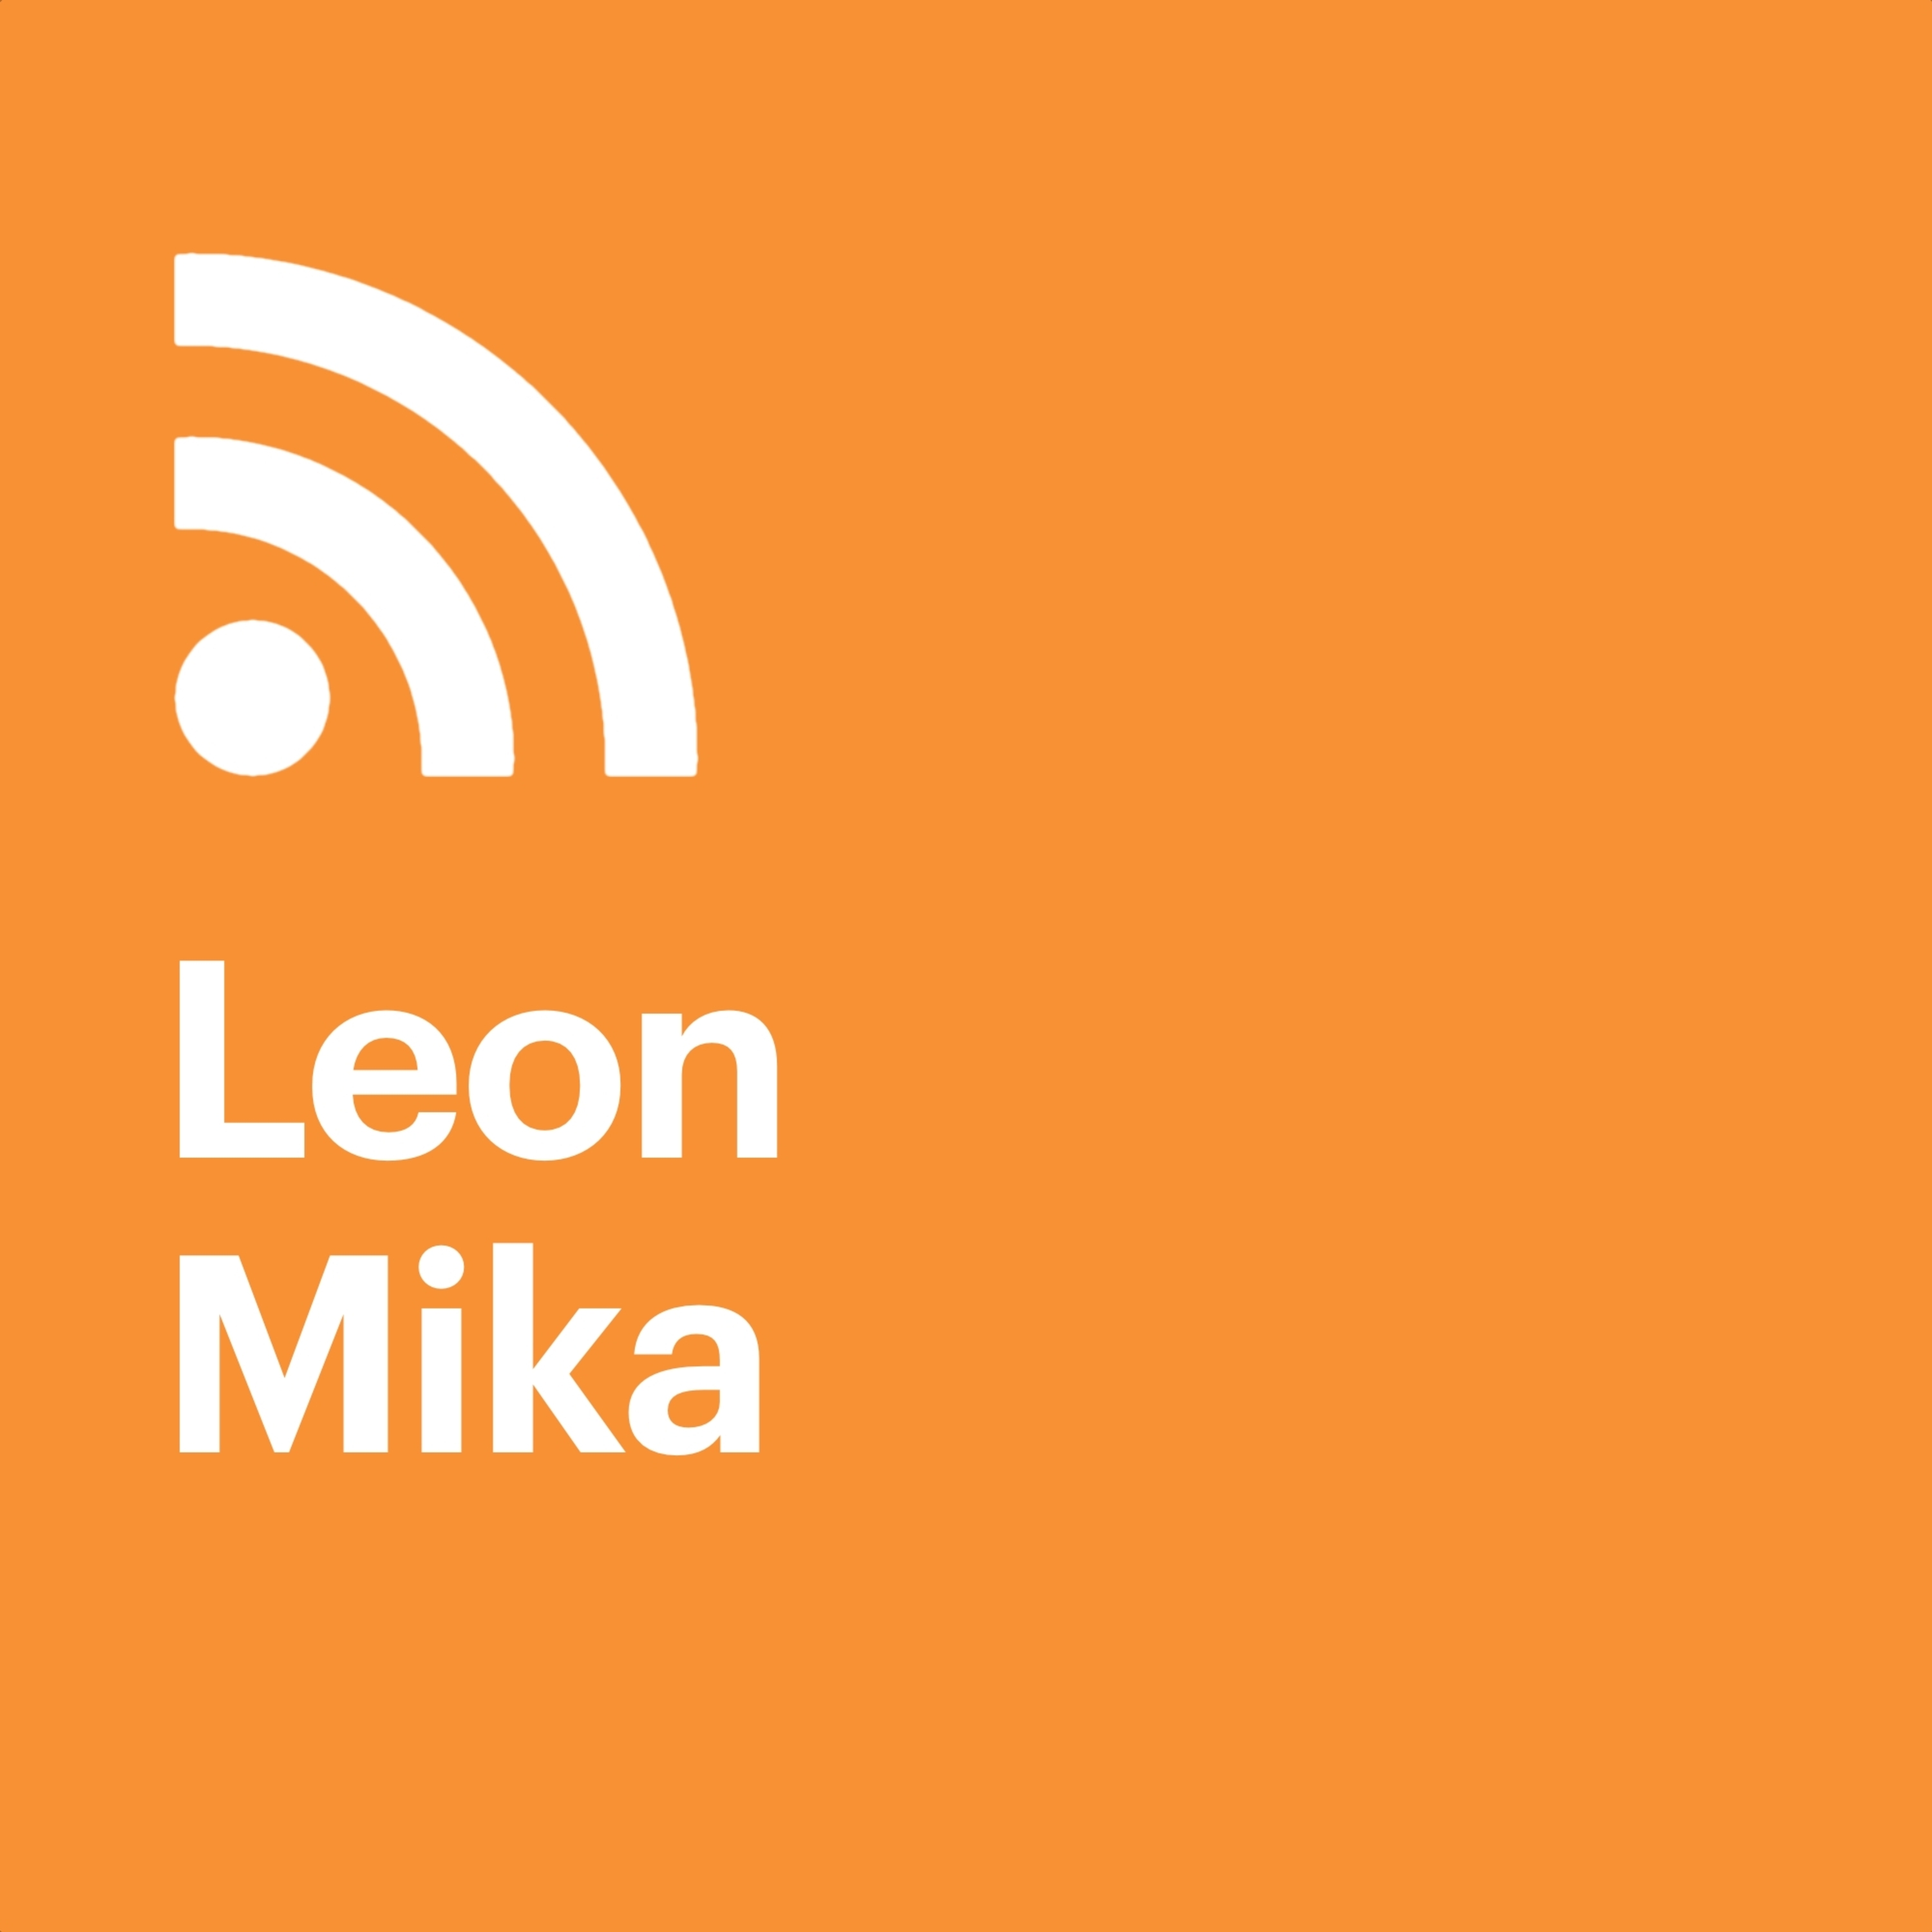 Leon Mika